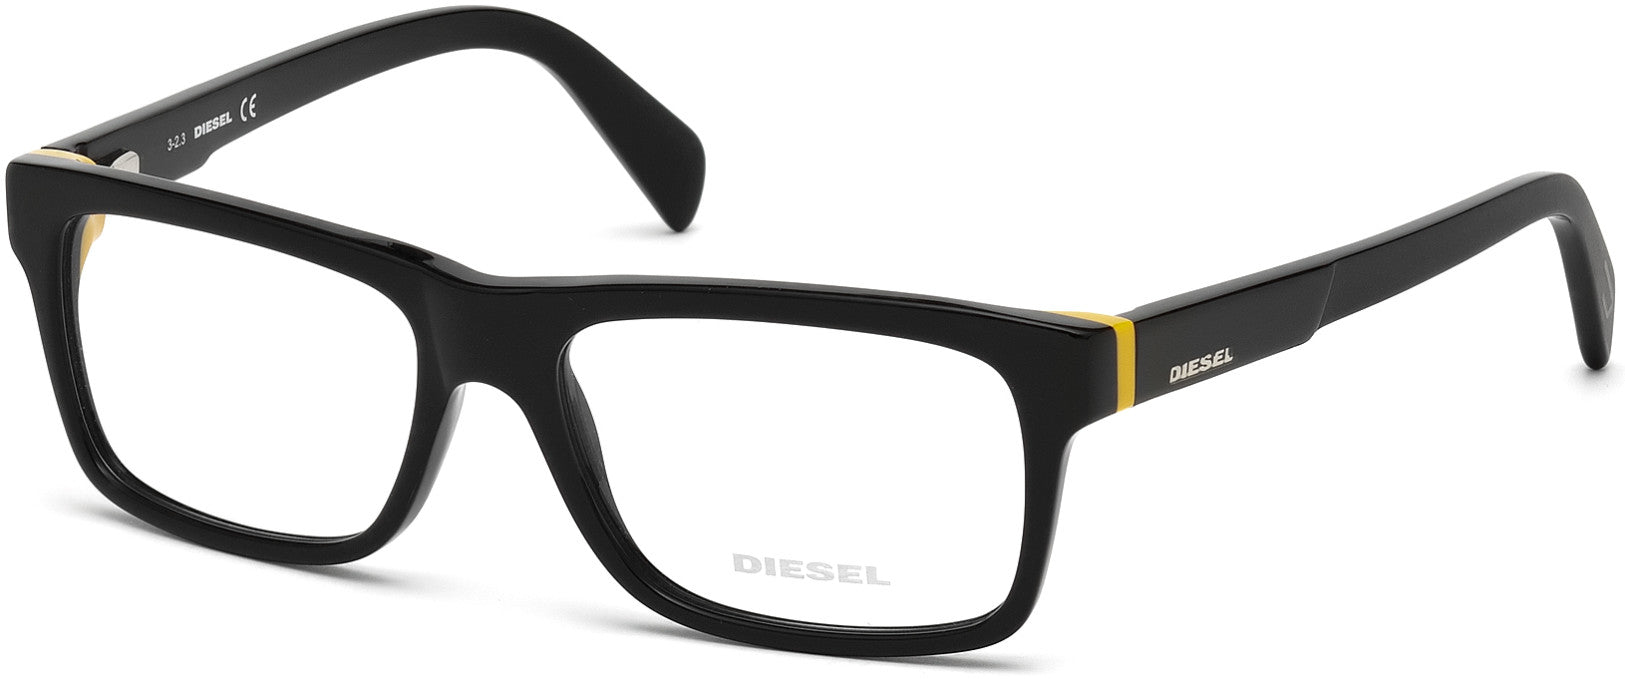 Diesel DL5071 Geometric Eyeglasses 001-001 - Shiny Black